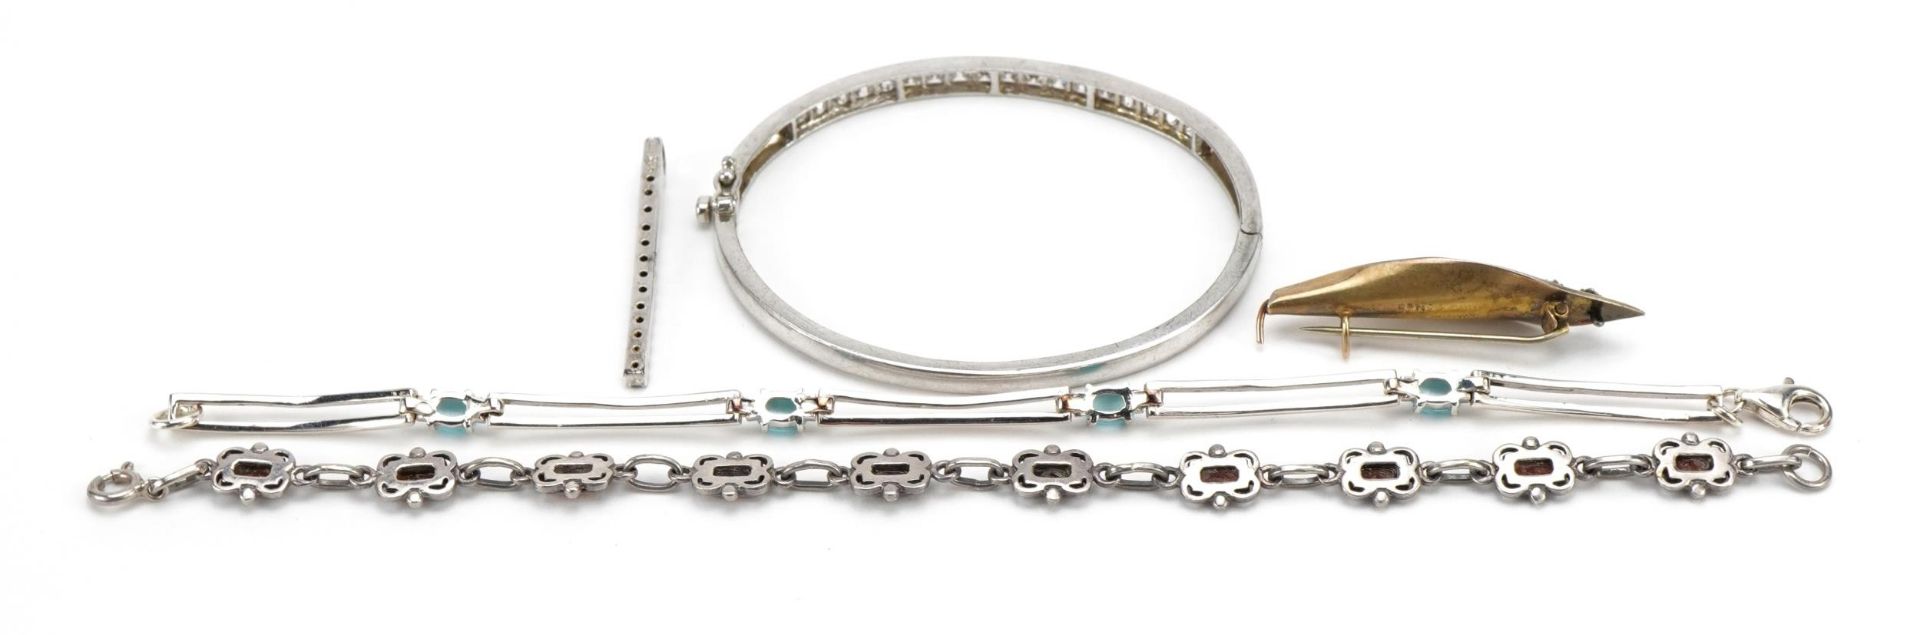 Silver jewellery comprising two gem set bracelets, hinged bangle and pendant set with black stones - Bild 4 aus 5